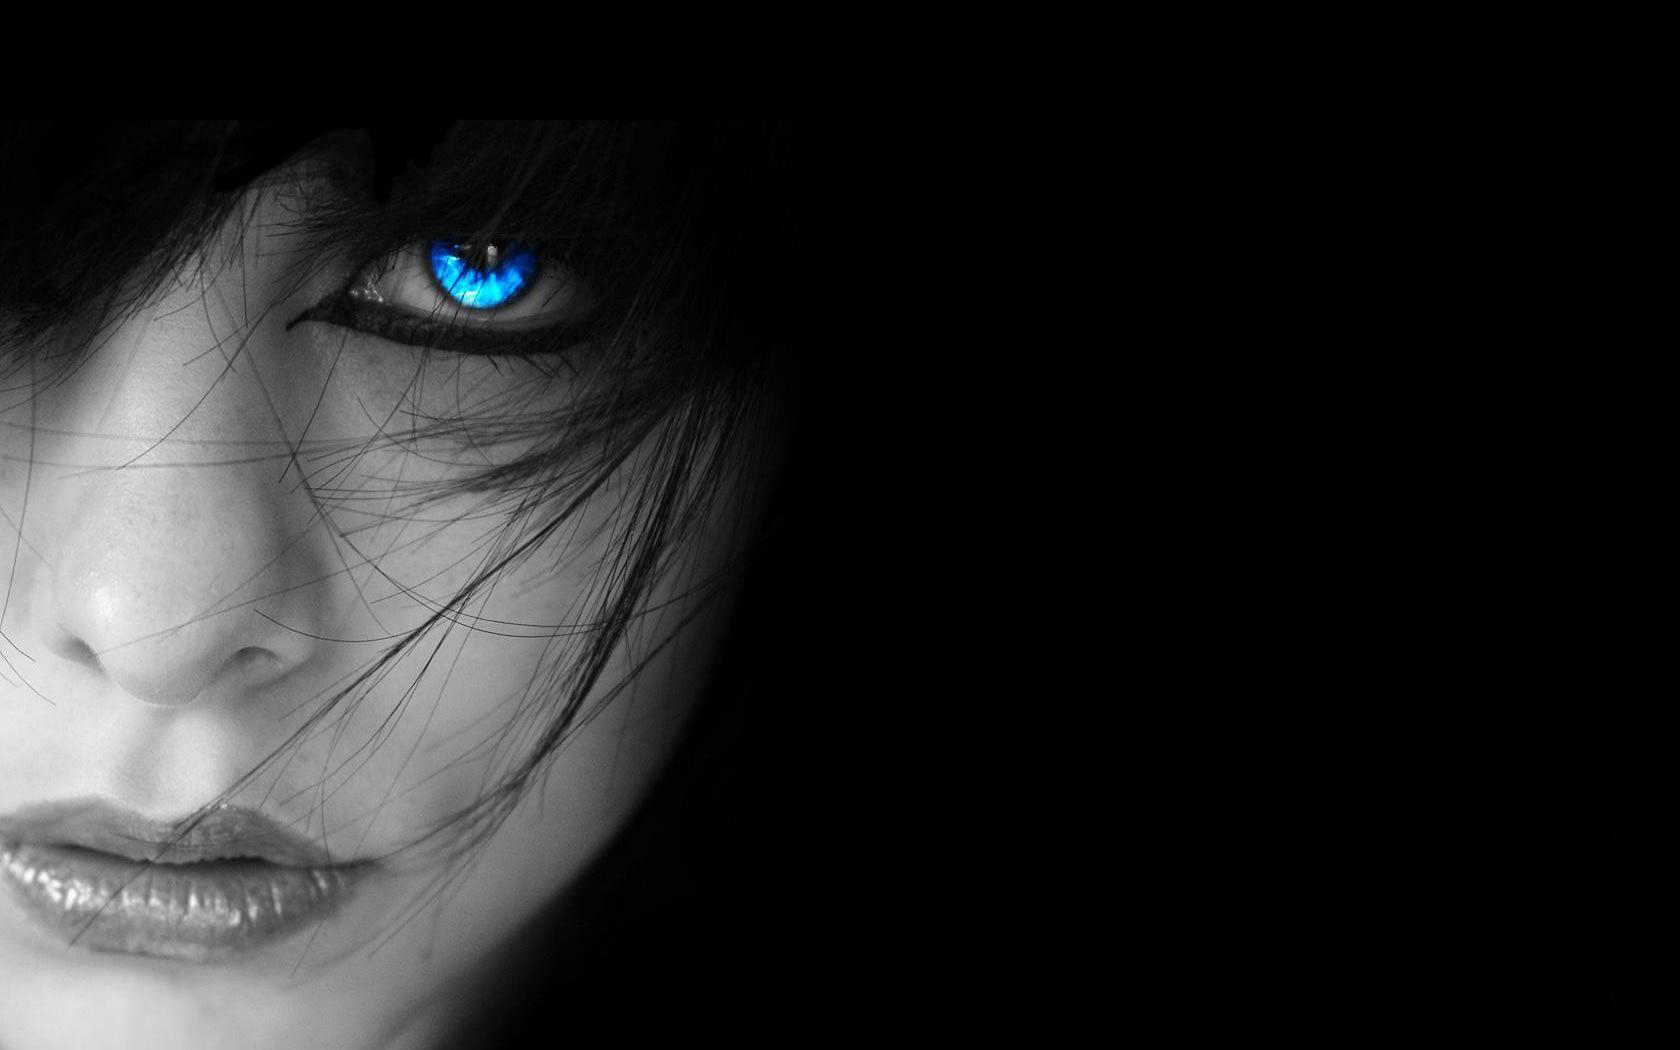 Free Beautiful Girl with Blue Eyes at Night Wallpaper. Eyes wallpaper, Beautiful eyes image, Blue eyed girls